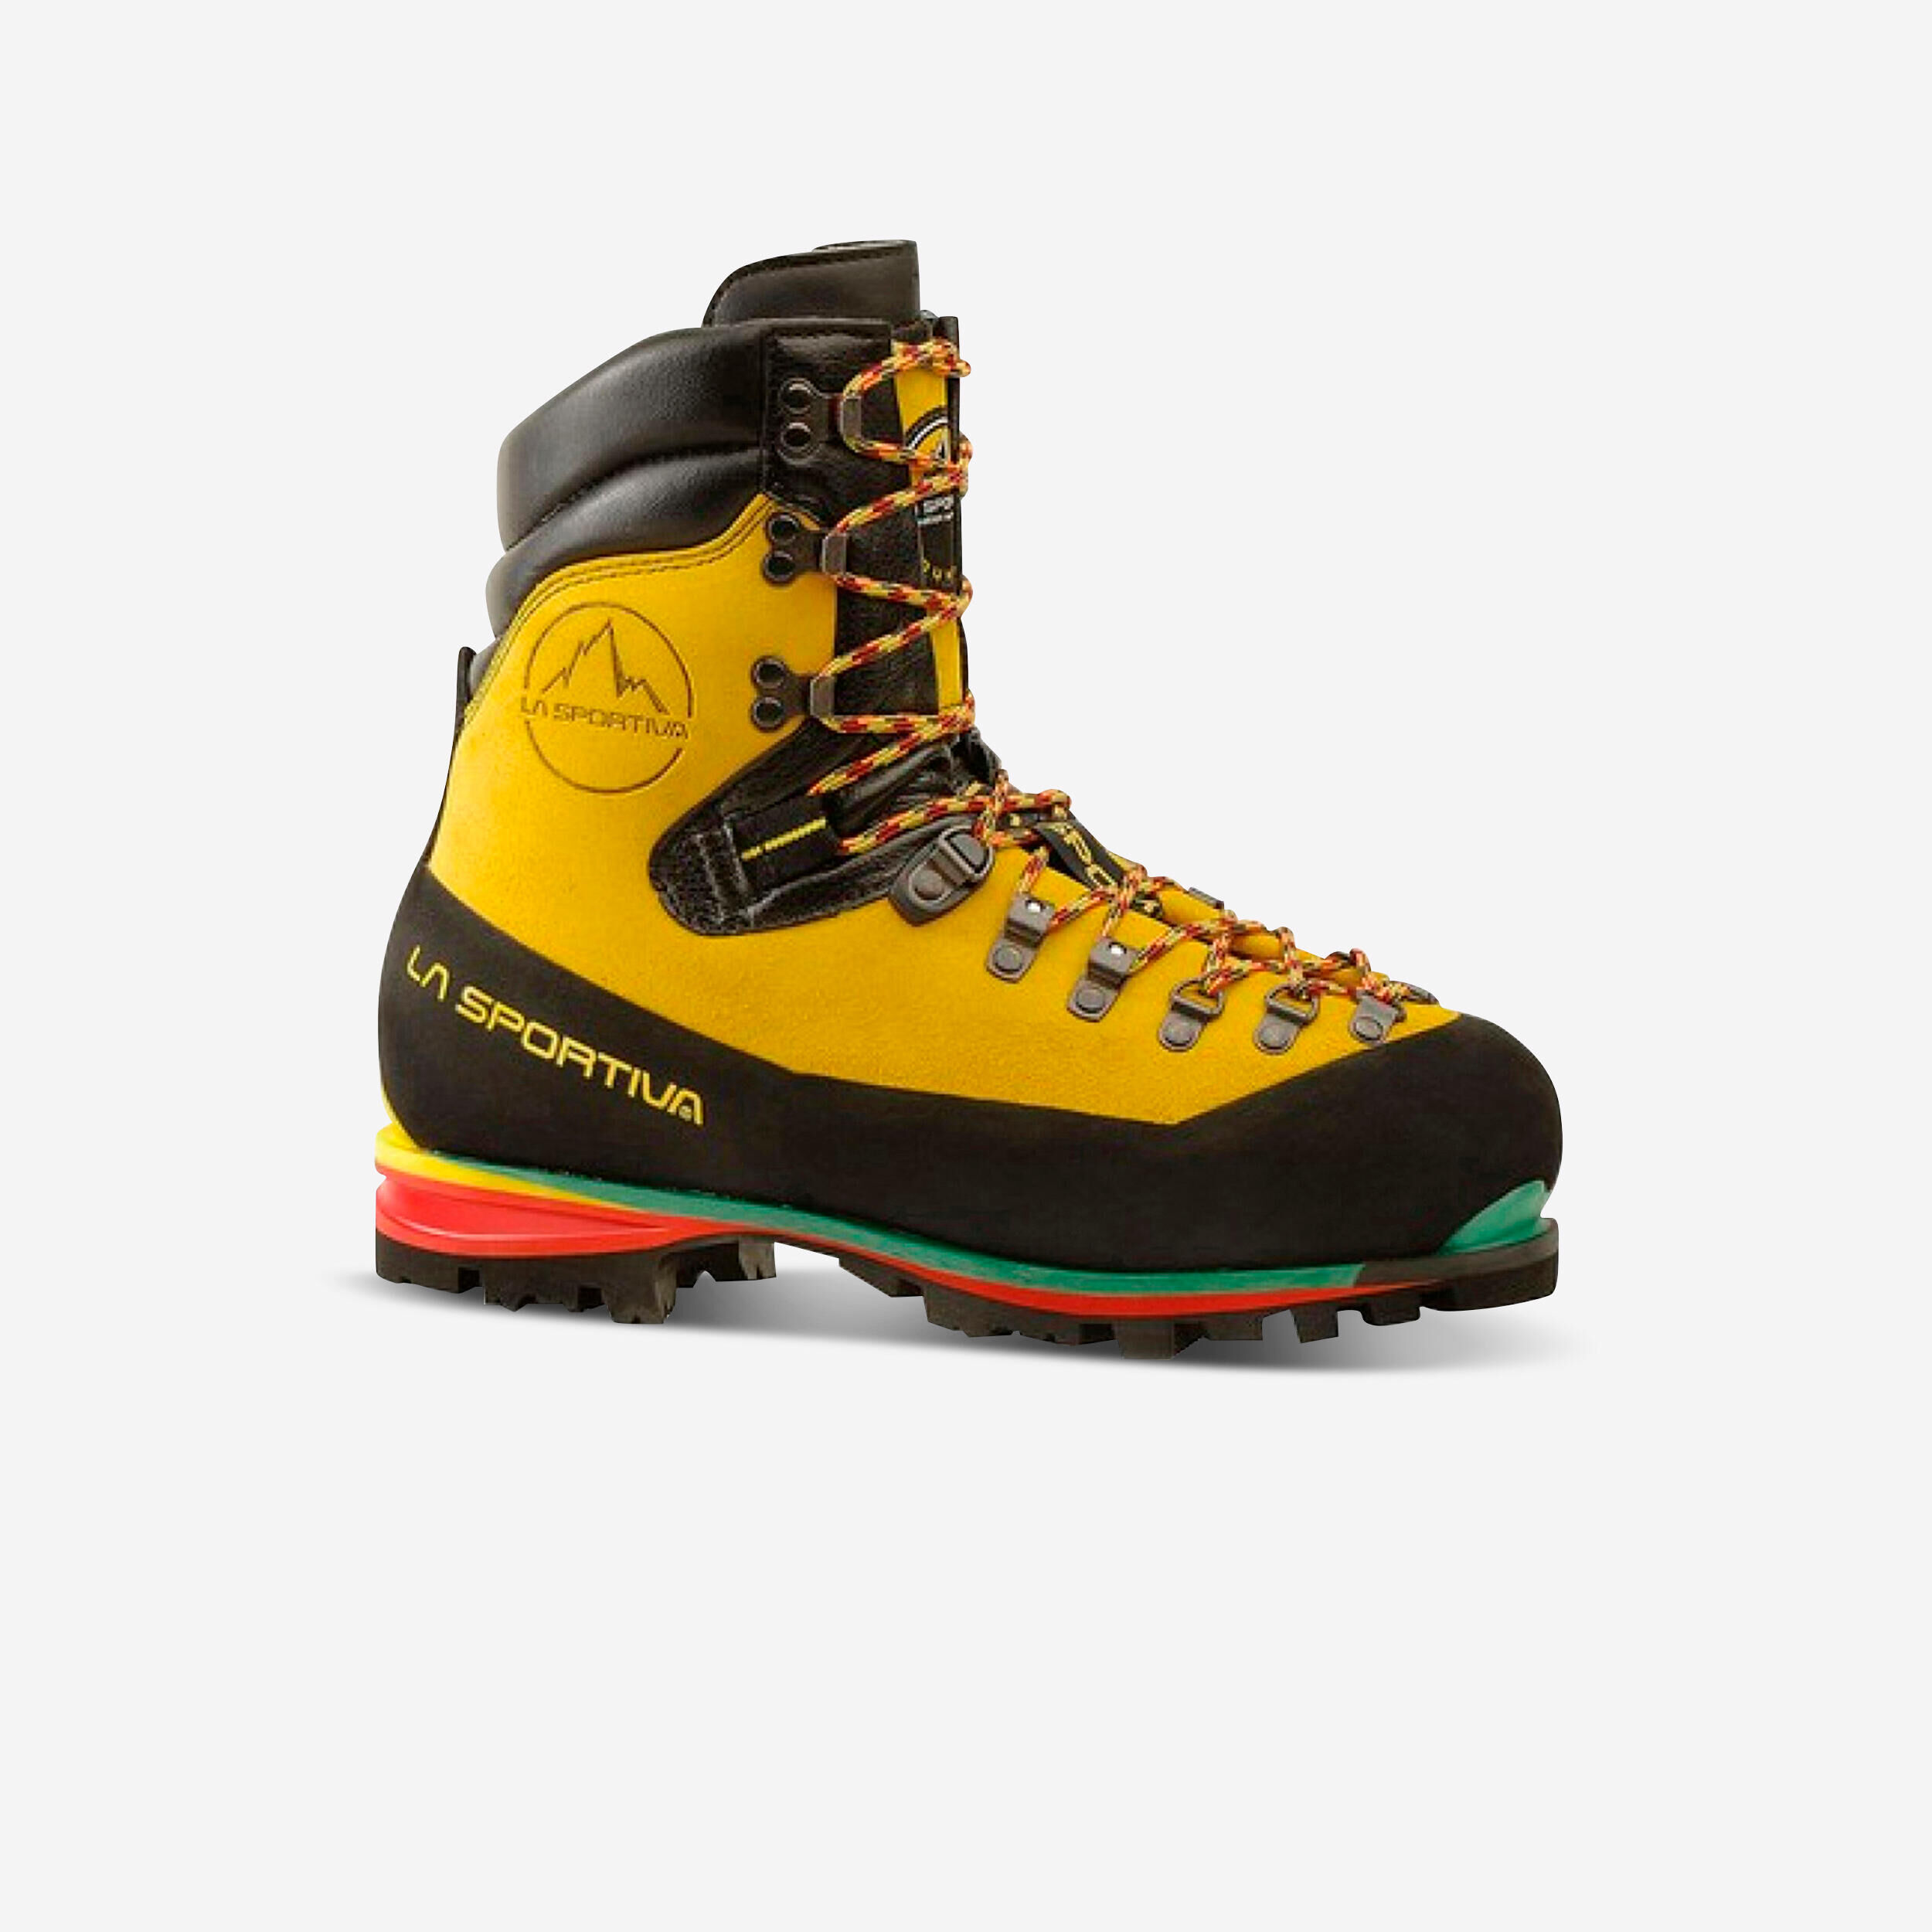 LA SPORTIVA Mountaineering Boots - NEPAL EXTREME